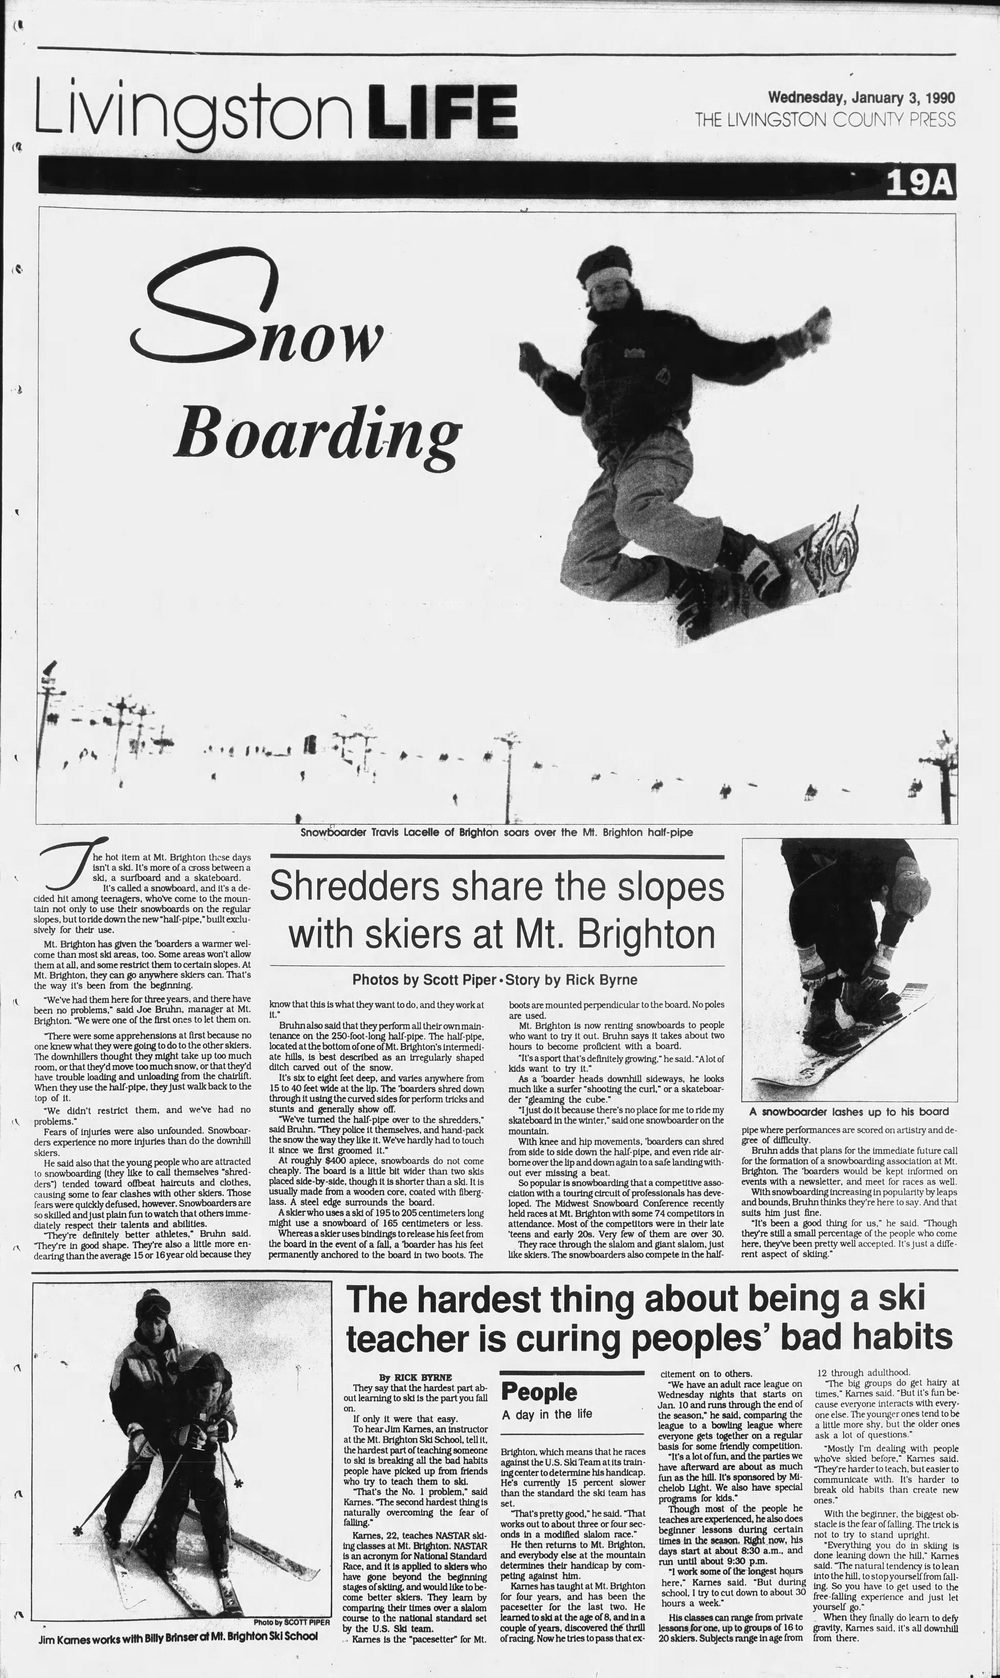 Mt. Brighton - 1990 Feature Article